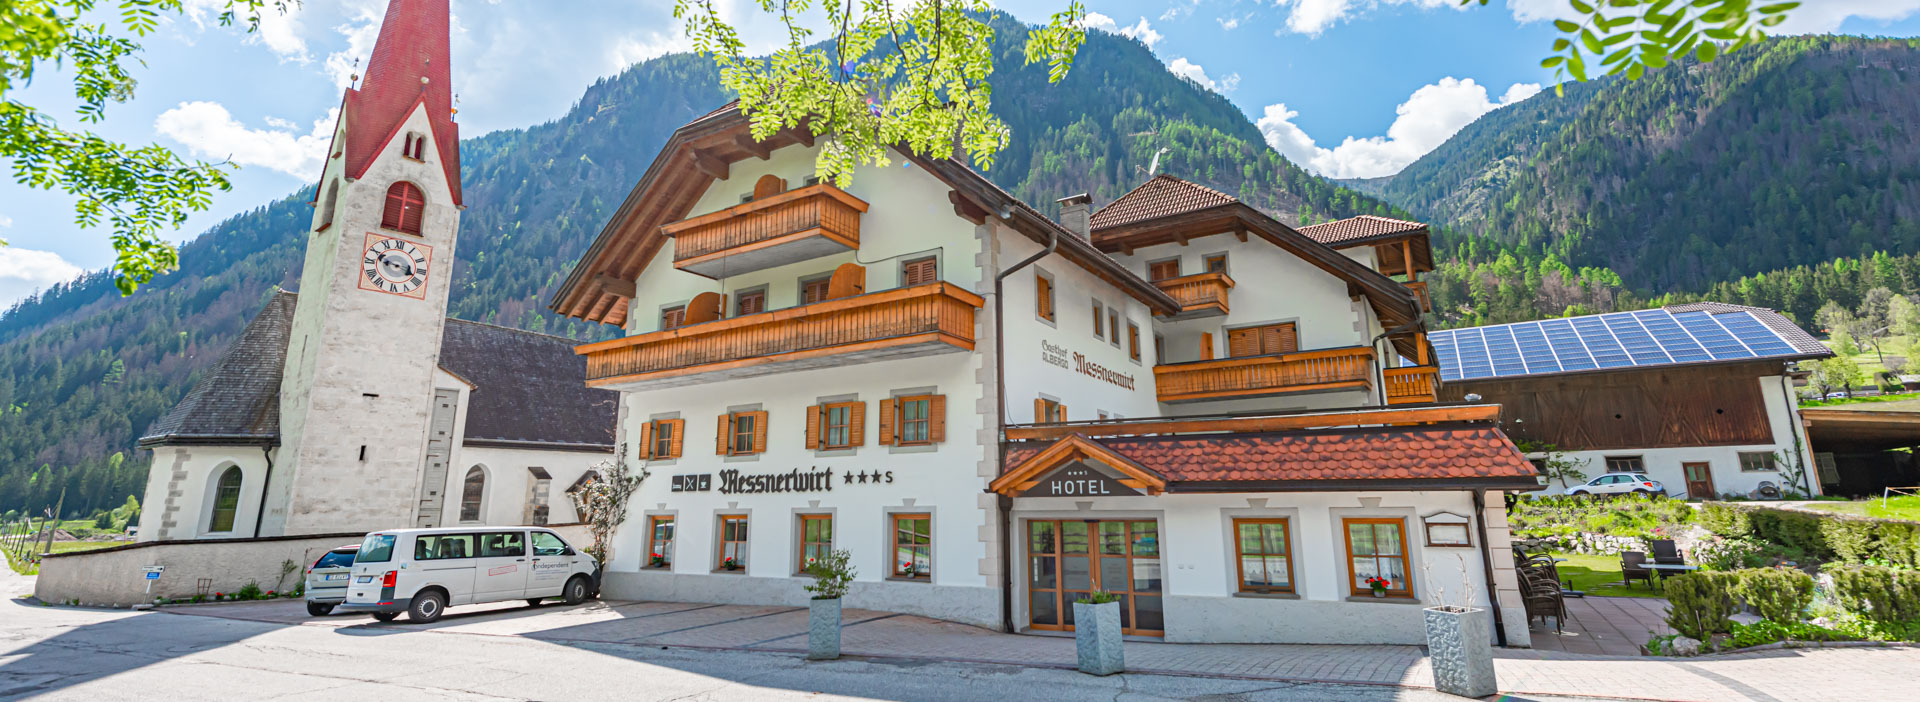 Hotel Gasthof Messnerwirt